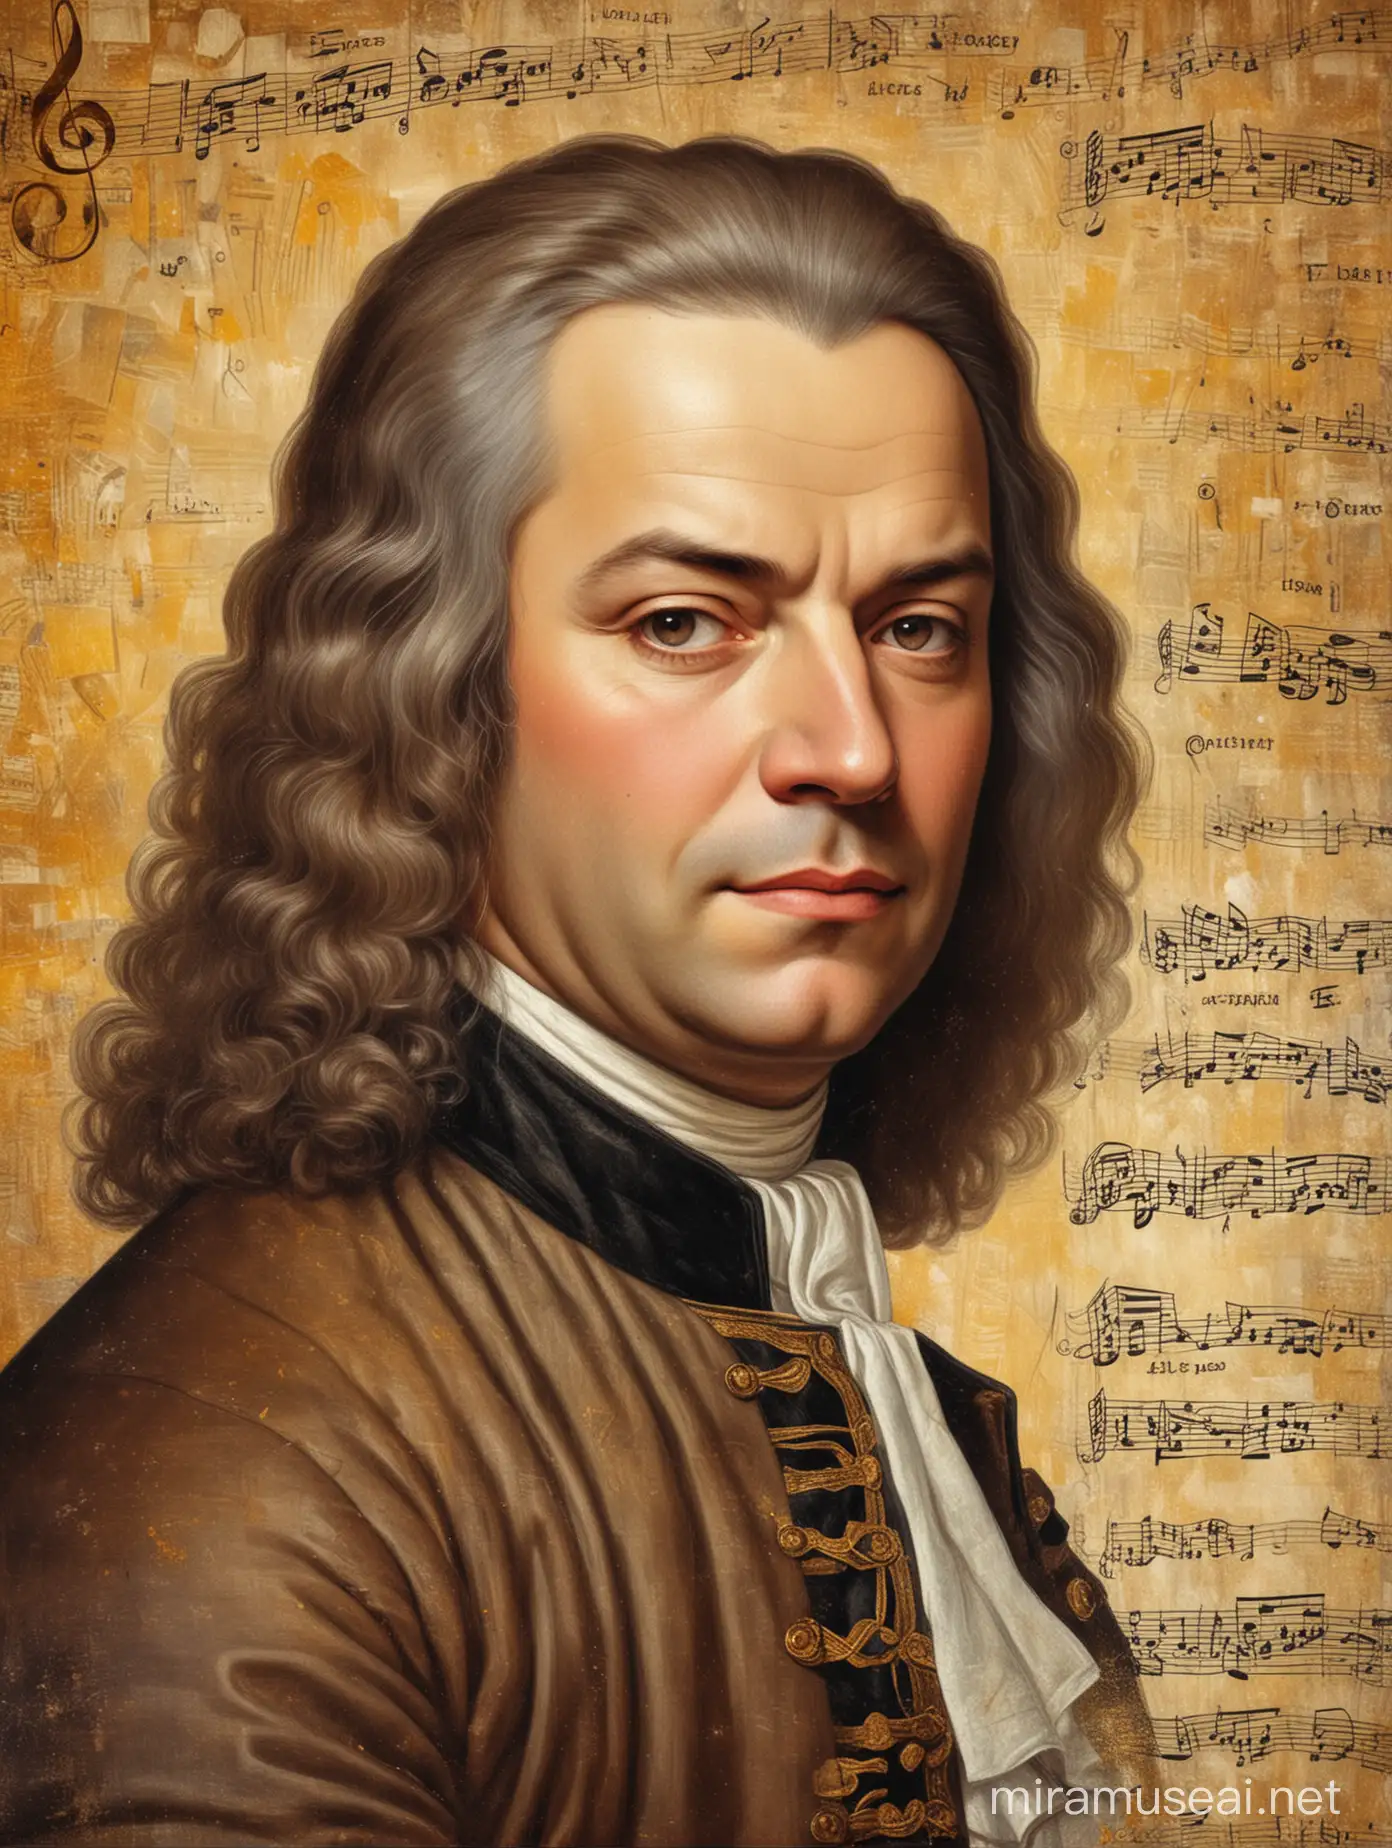 Johann Sebastian Bach Portrait in KlimtStyle with Musical Note Motif in Realistic Pastel Tones